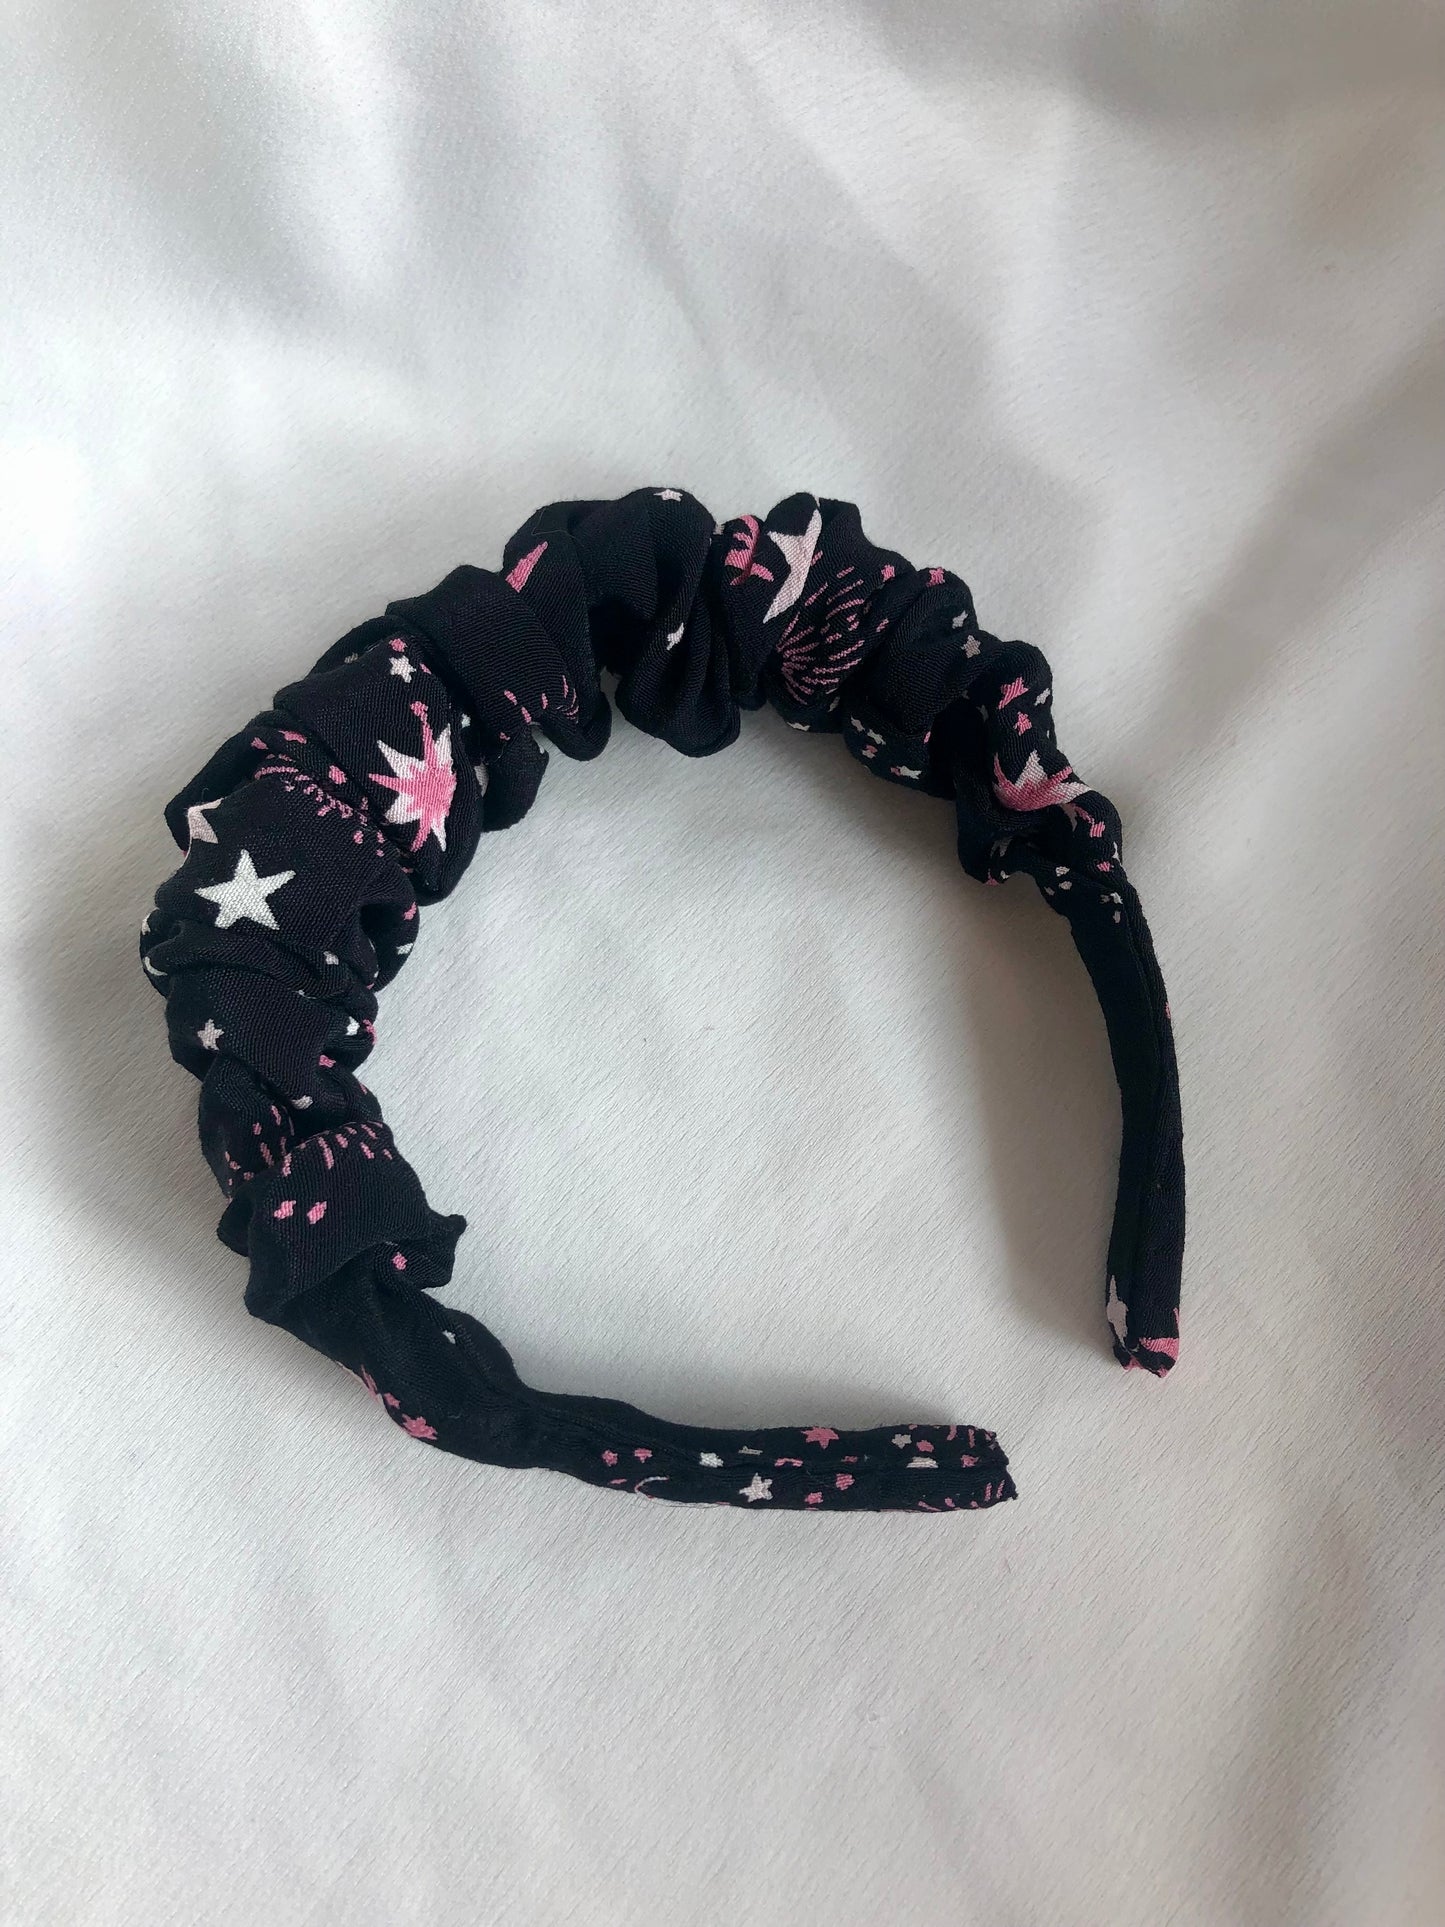 Sakura Pink & White Starry headband - choose style